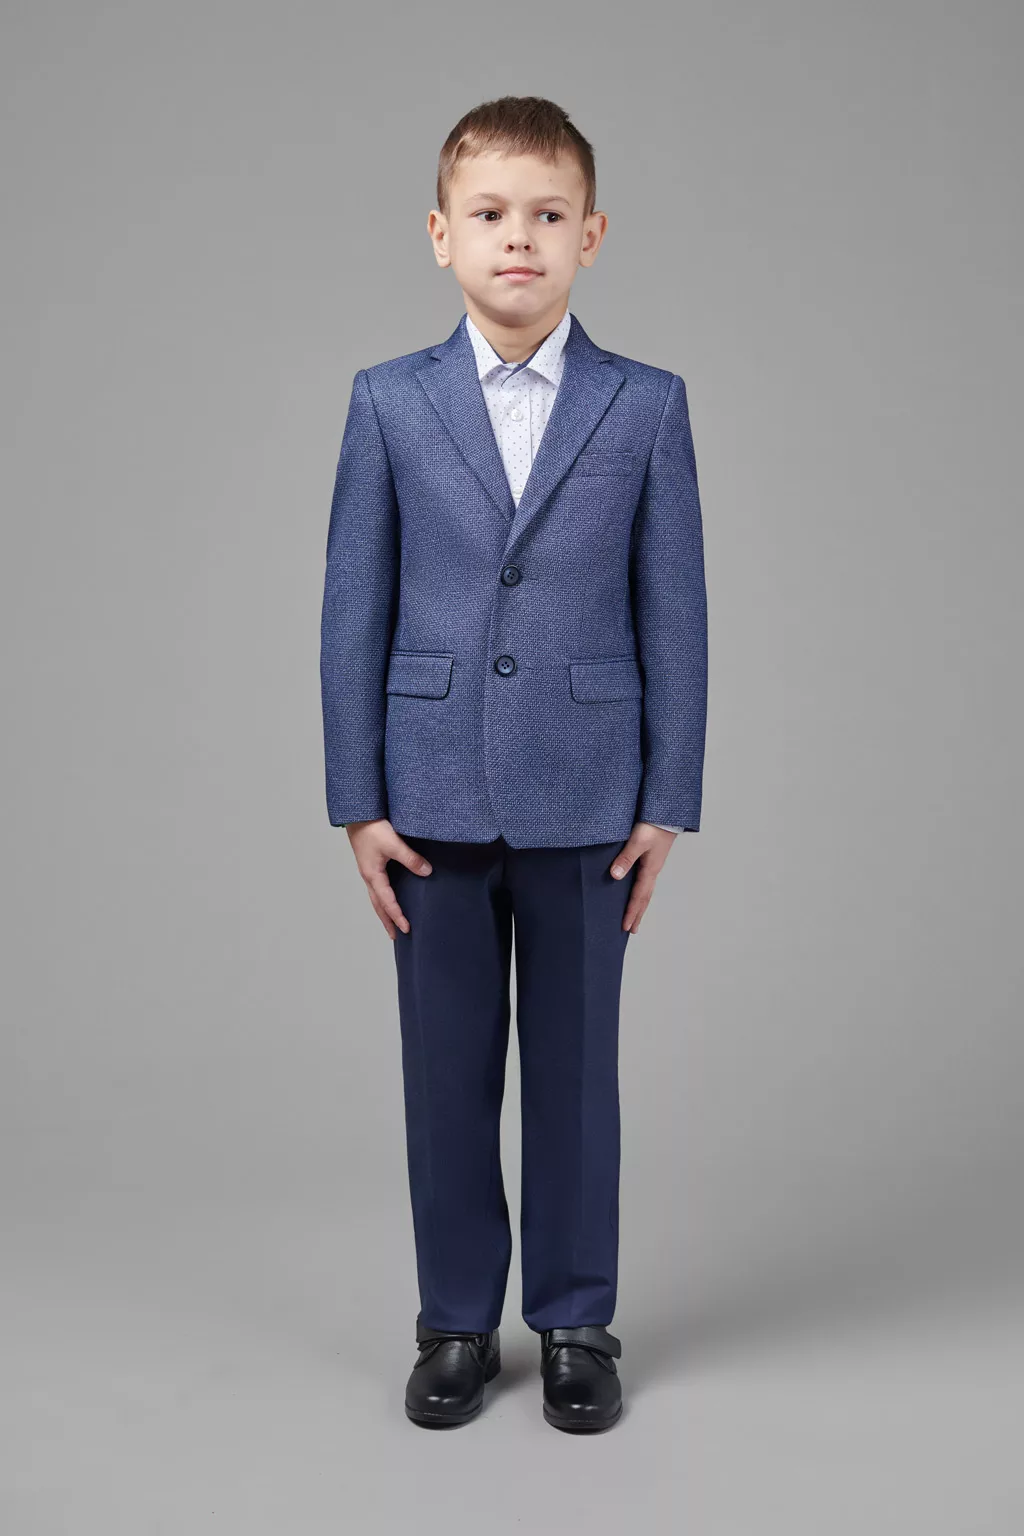 Пиджак для мальчика младшая школа